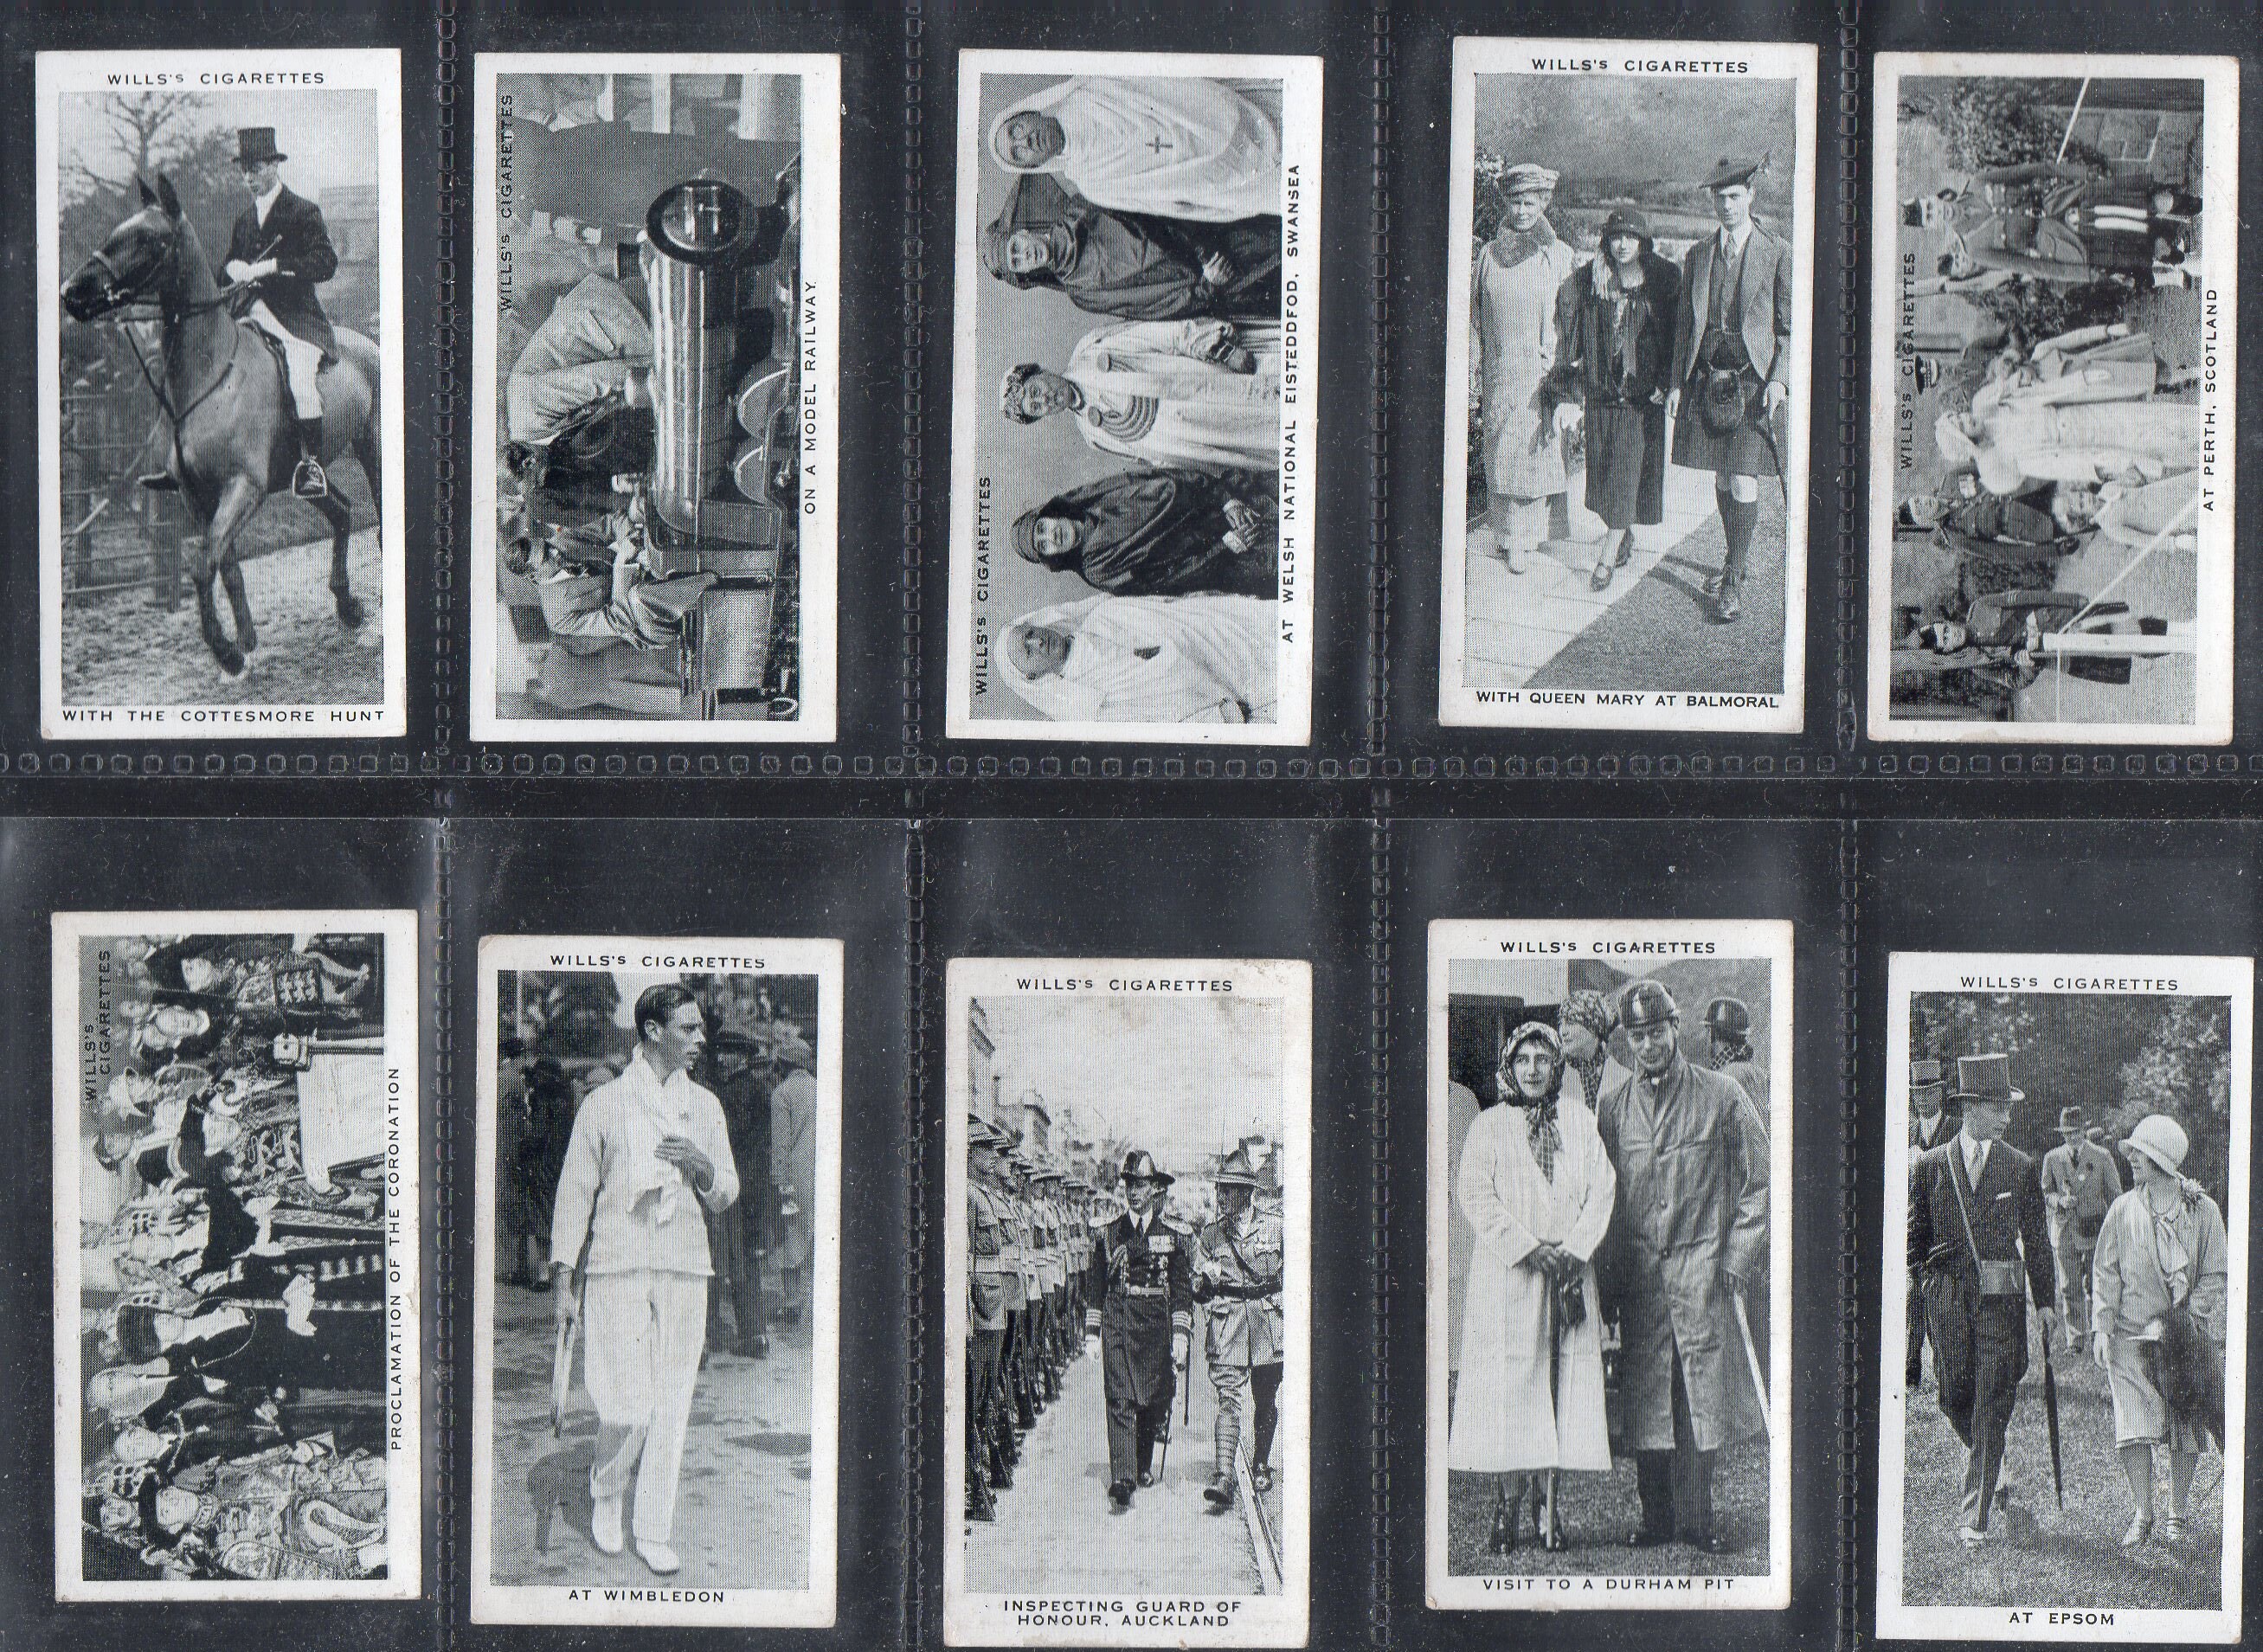 Lot Detail - 1937 New York Black Yankees Team Photo In Framed Display